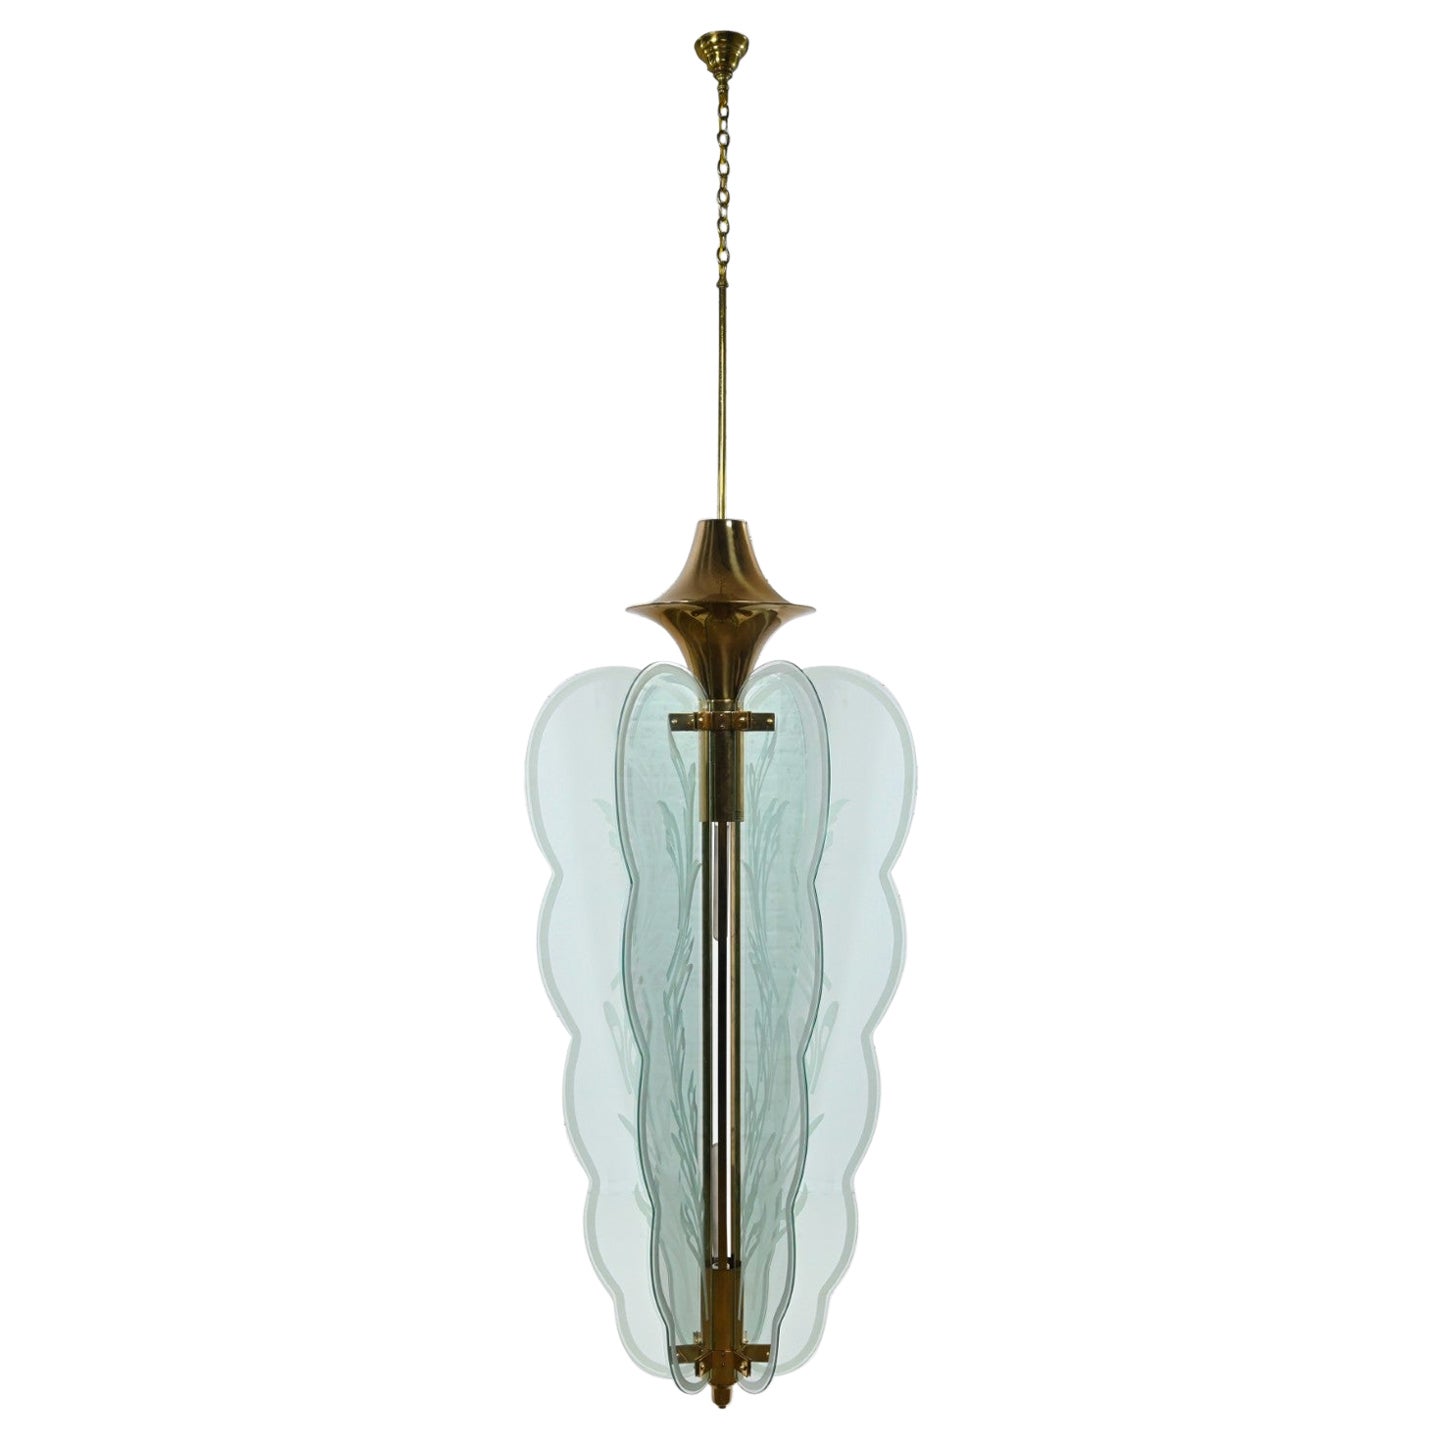 Art Deco Revival Monumental Brass Etched Glass Hanging Light Fixture Chandelier For Sale